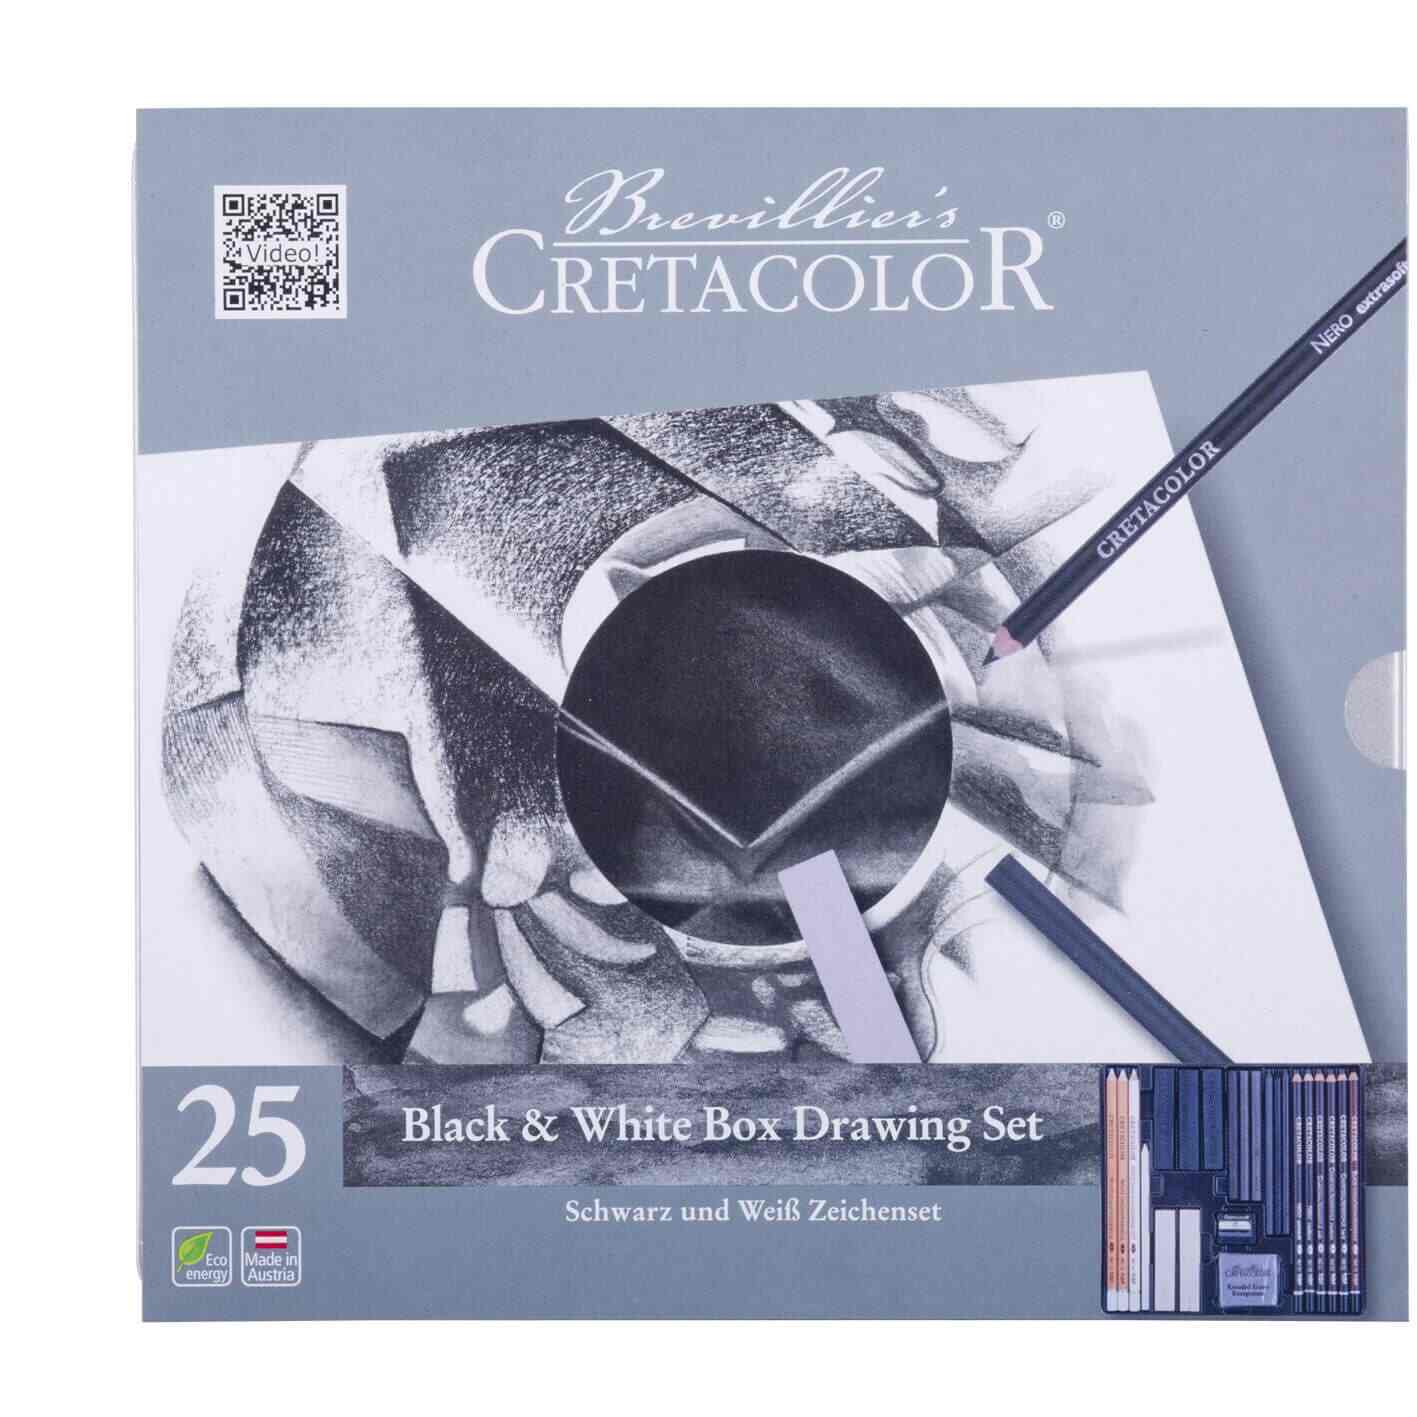 Cretacolor Black & White Box Drawing Set Of 25